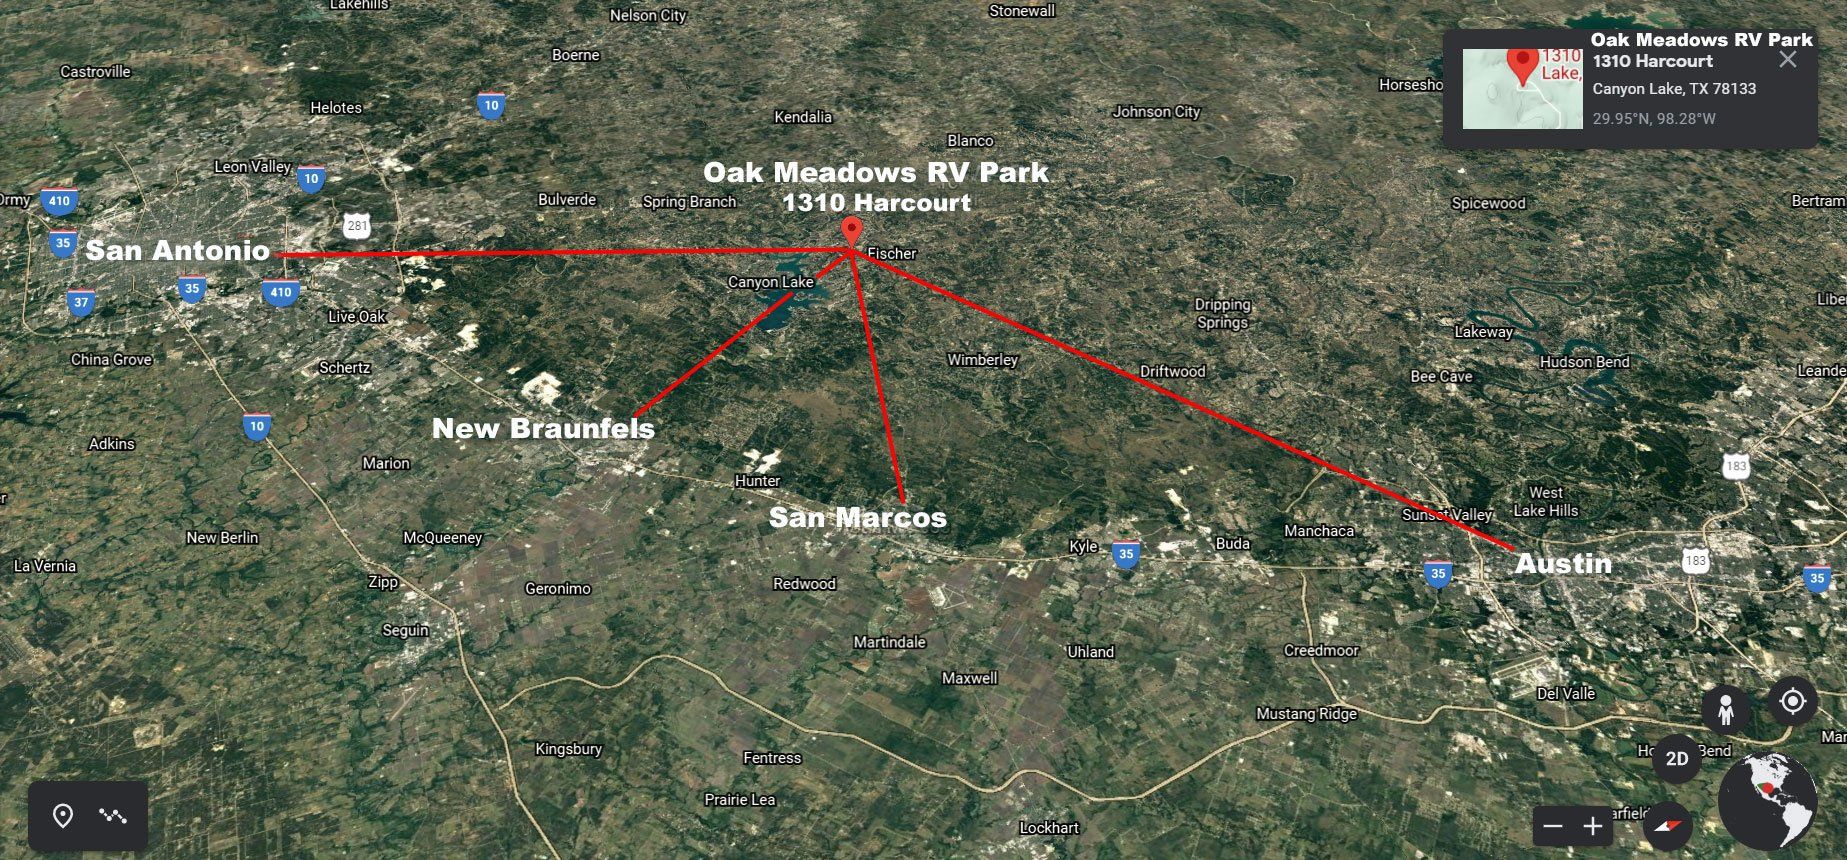 Oak Meadows RV Park in Canyon Lake, TX - Long Term RV Sites near San Antonio, New Braunfels, San Marcos, and Austin, TX